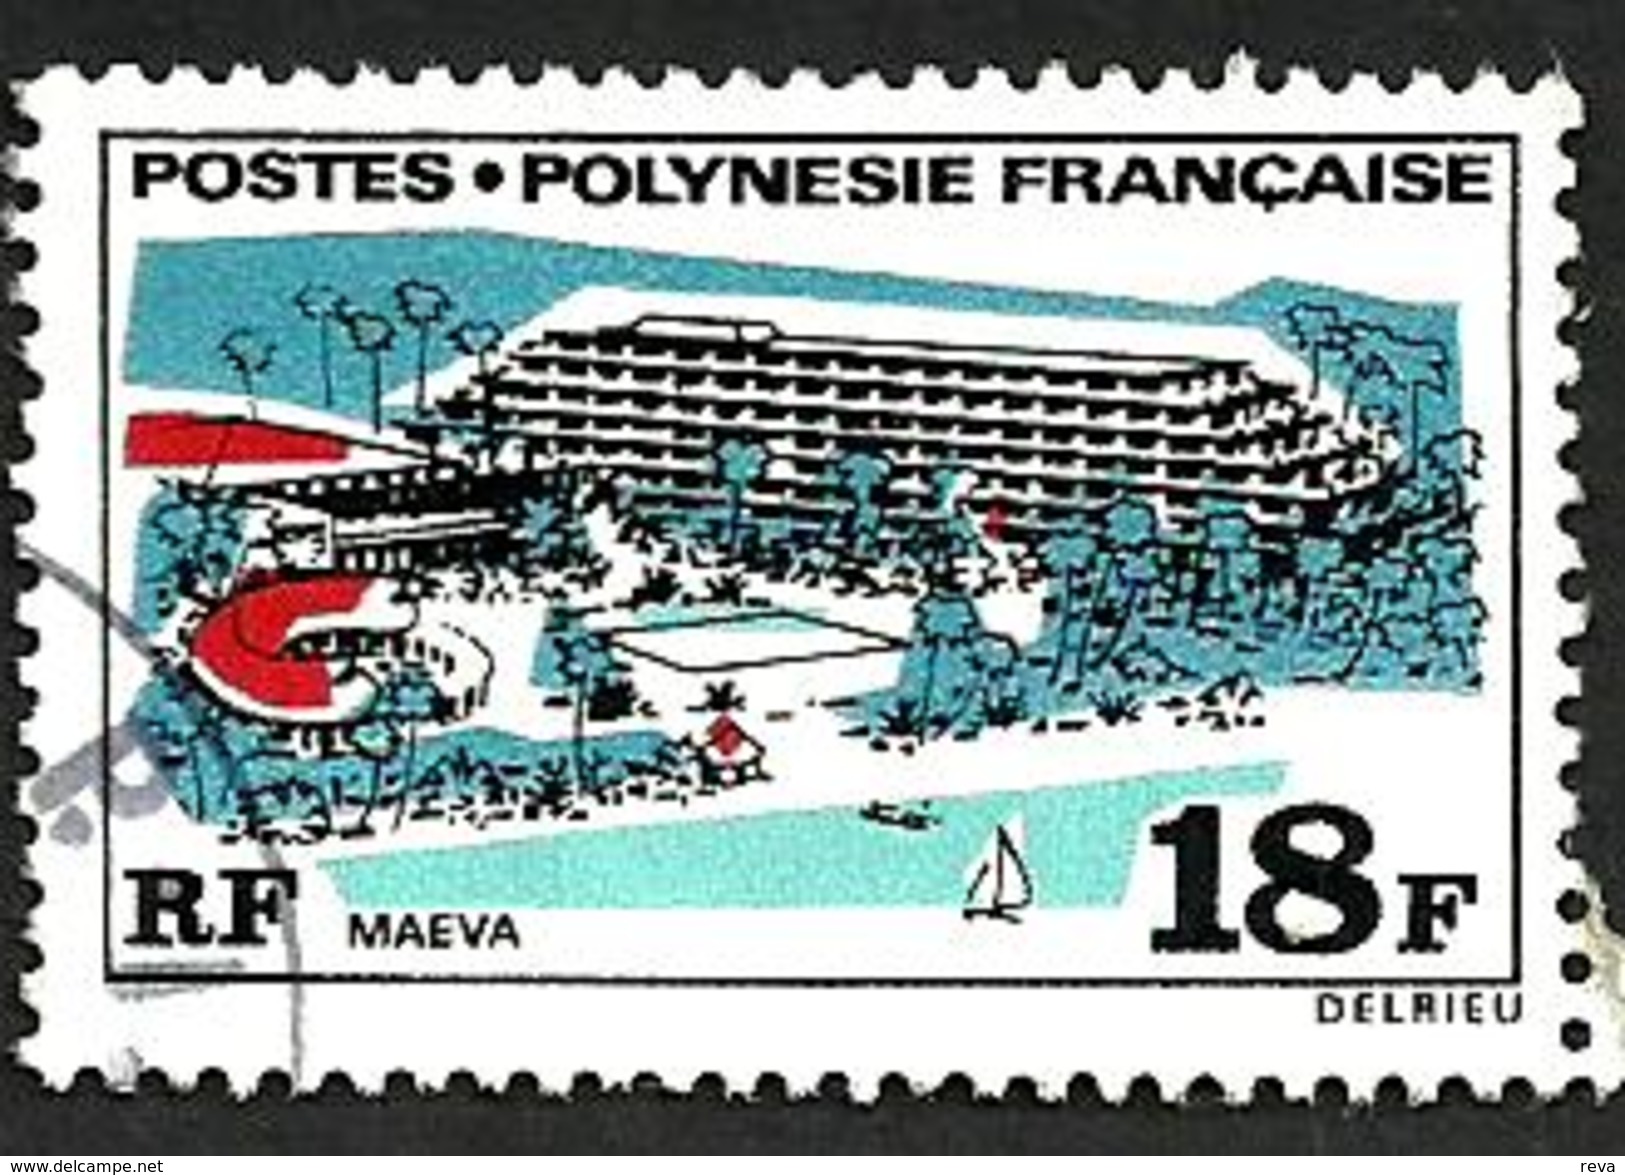 POLYNESIE FRANCAISE MAISON DU TOURISME HOTEL 18 FR STAMP ISSUED 1970's SG107 USED CV£6 READ DESCRIPTION!! - Gebruikt